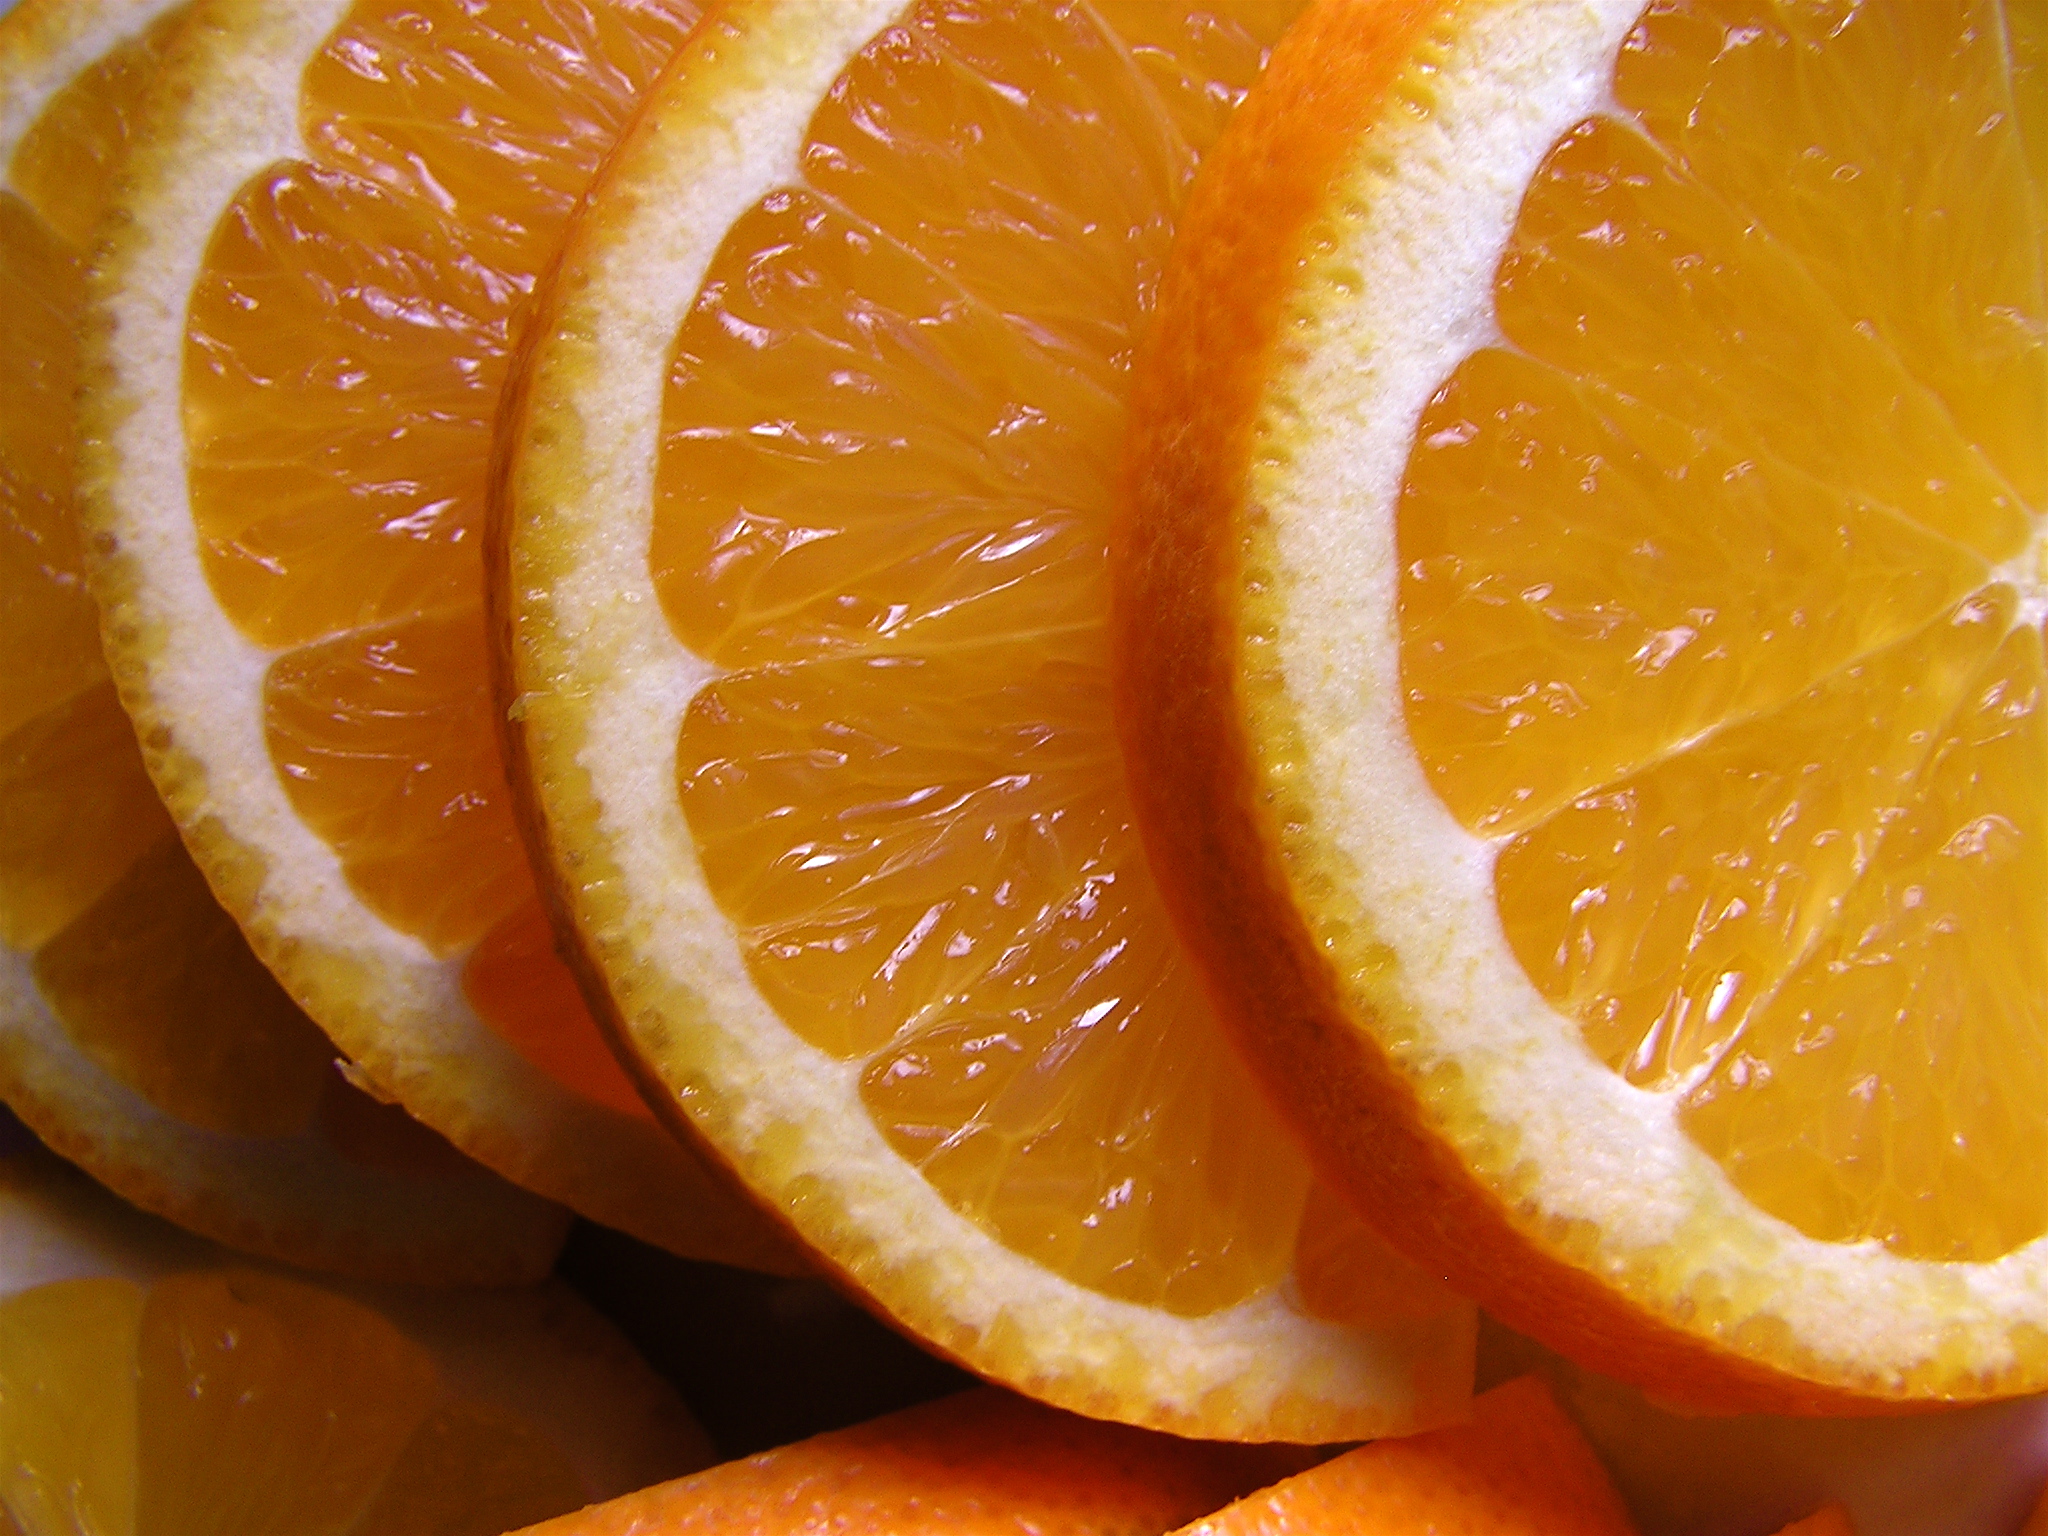 File:Oranges macro.jpg - Wikimedia Commons